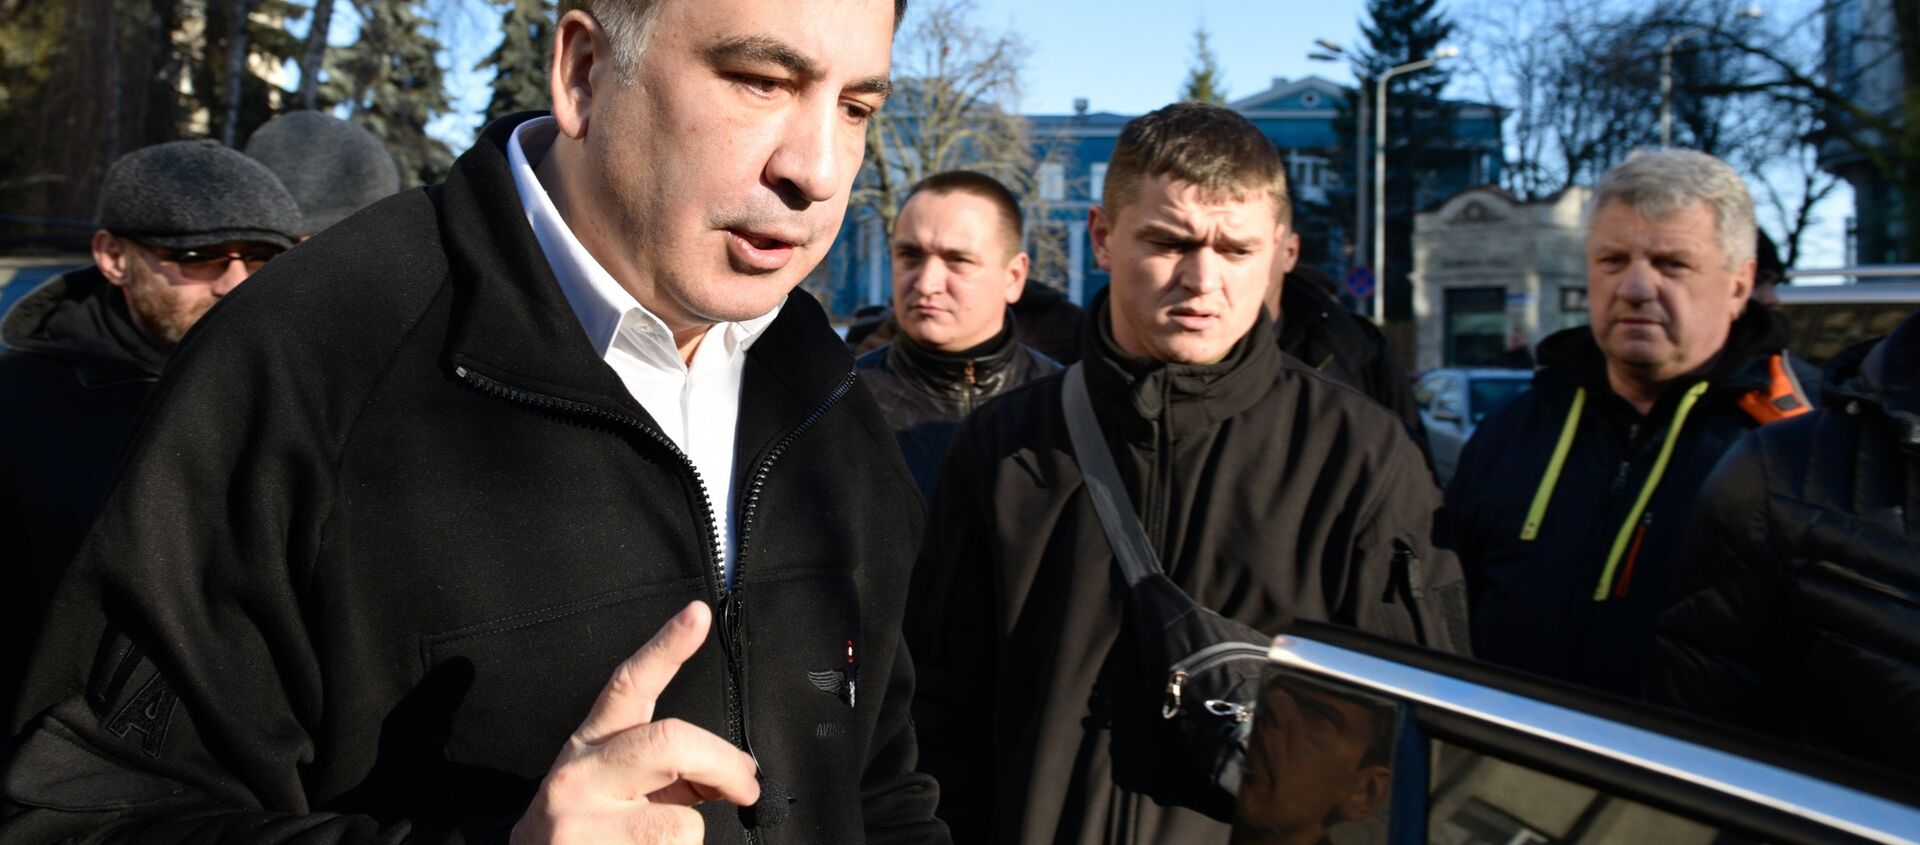 Mijaíl Saakashvili, expresidente de Georgia - Sputnik Mundo, 1920, 17.10.2018